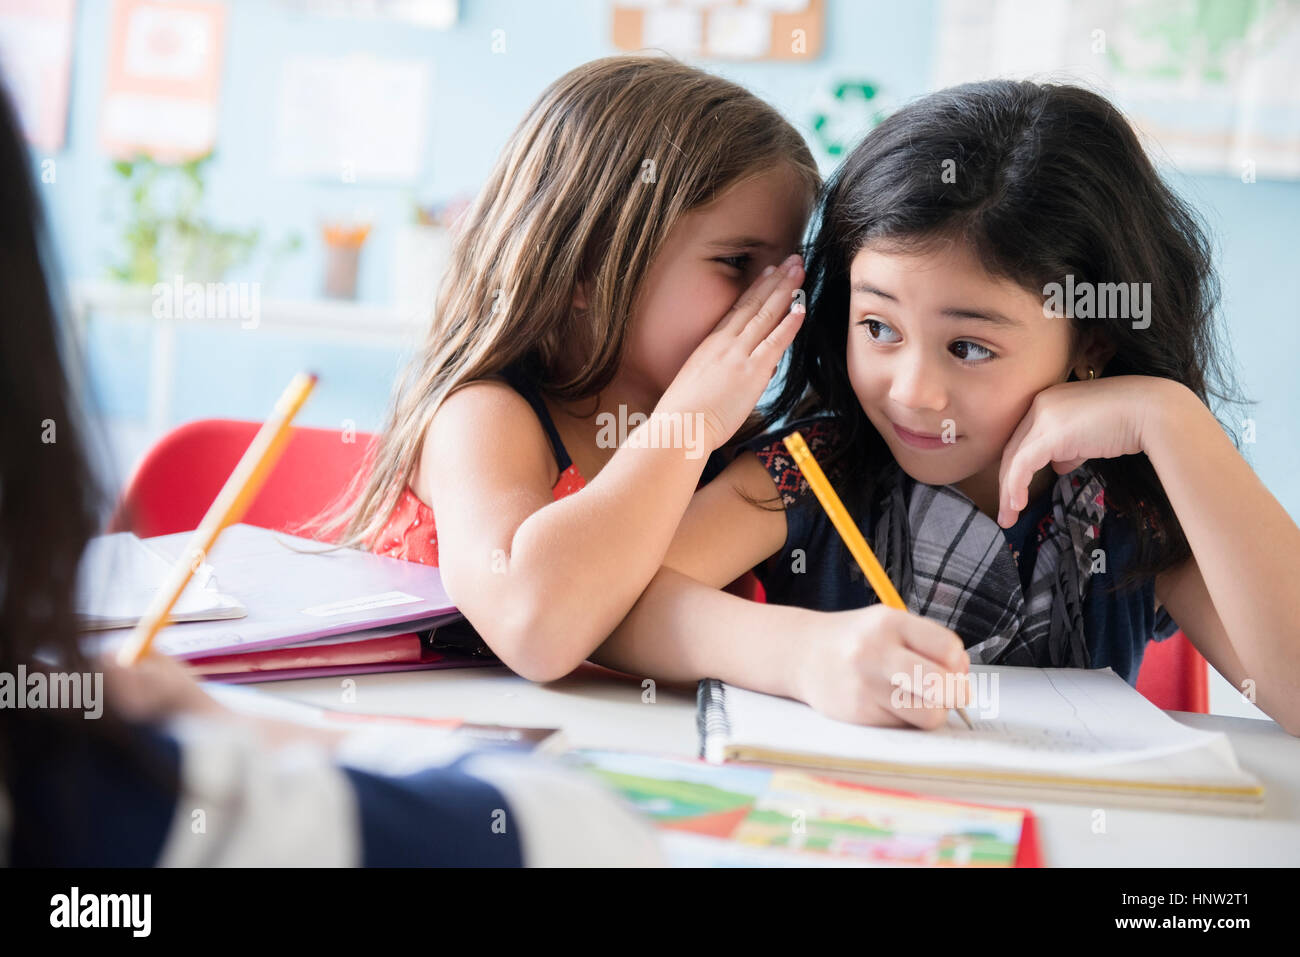 Girl whispering to classmate in school Stock Photo